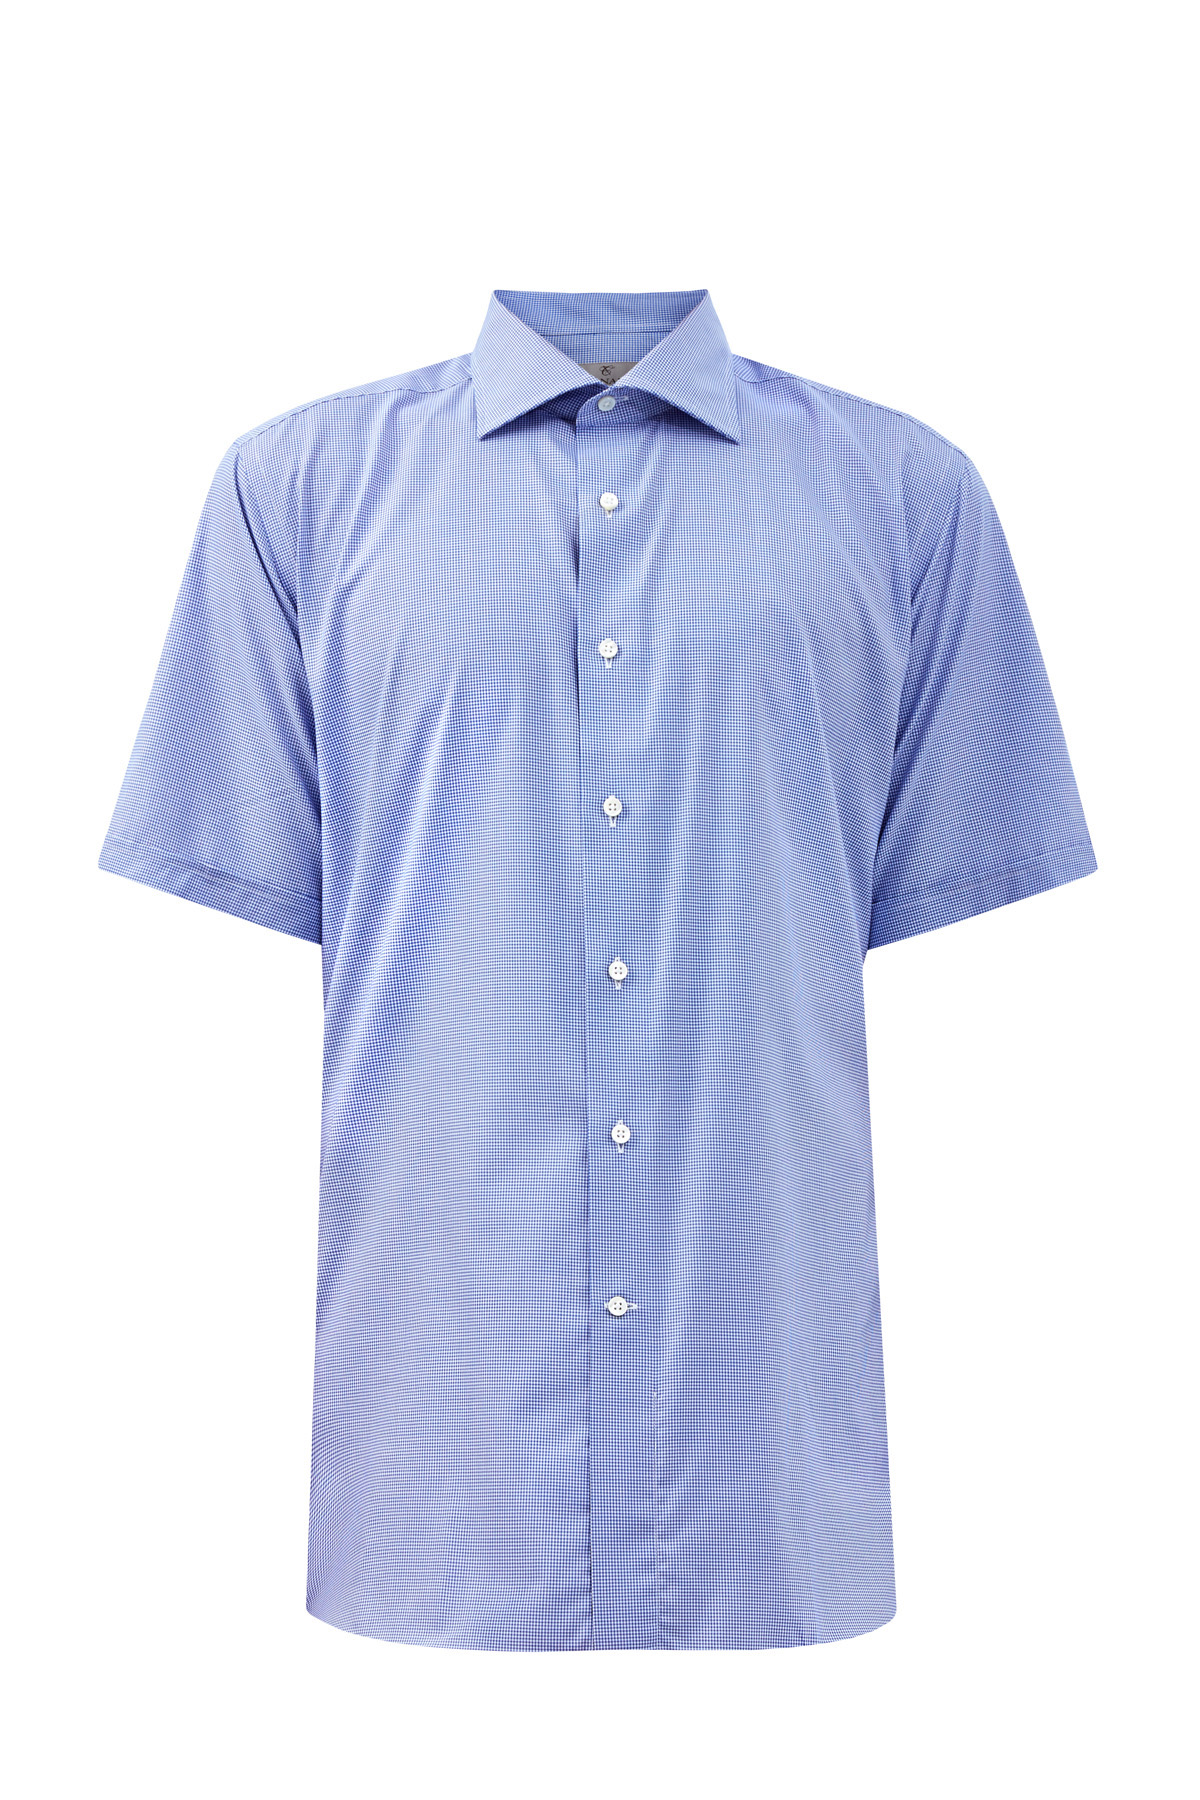 Рубашка с микро-принтом в клетку виши из хлопка Impeccabile CANALI, цвет синий, размер 58;60 - фото 1